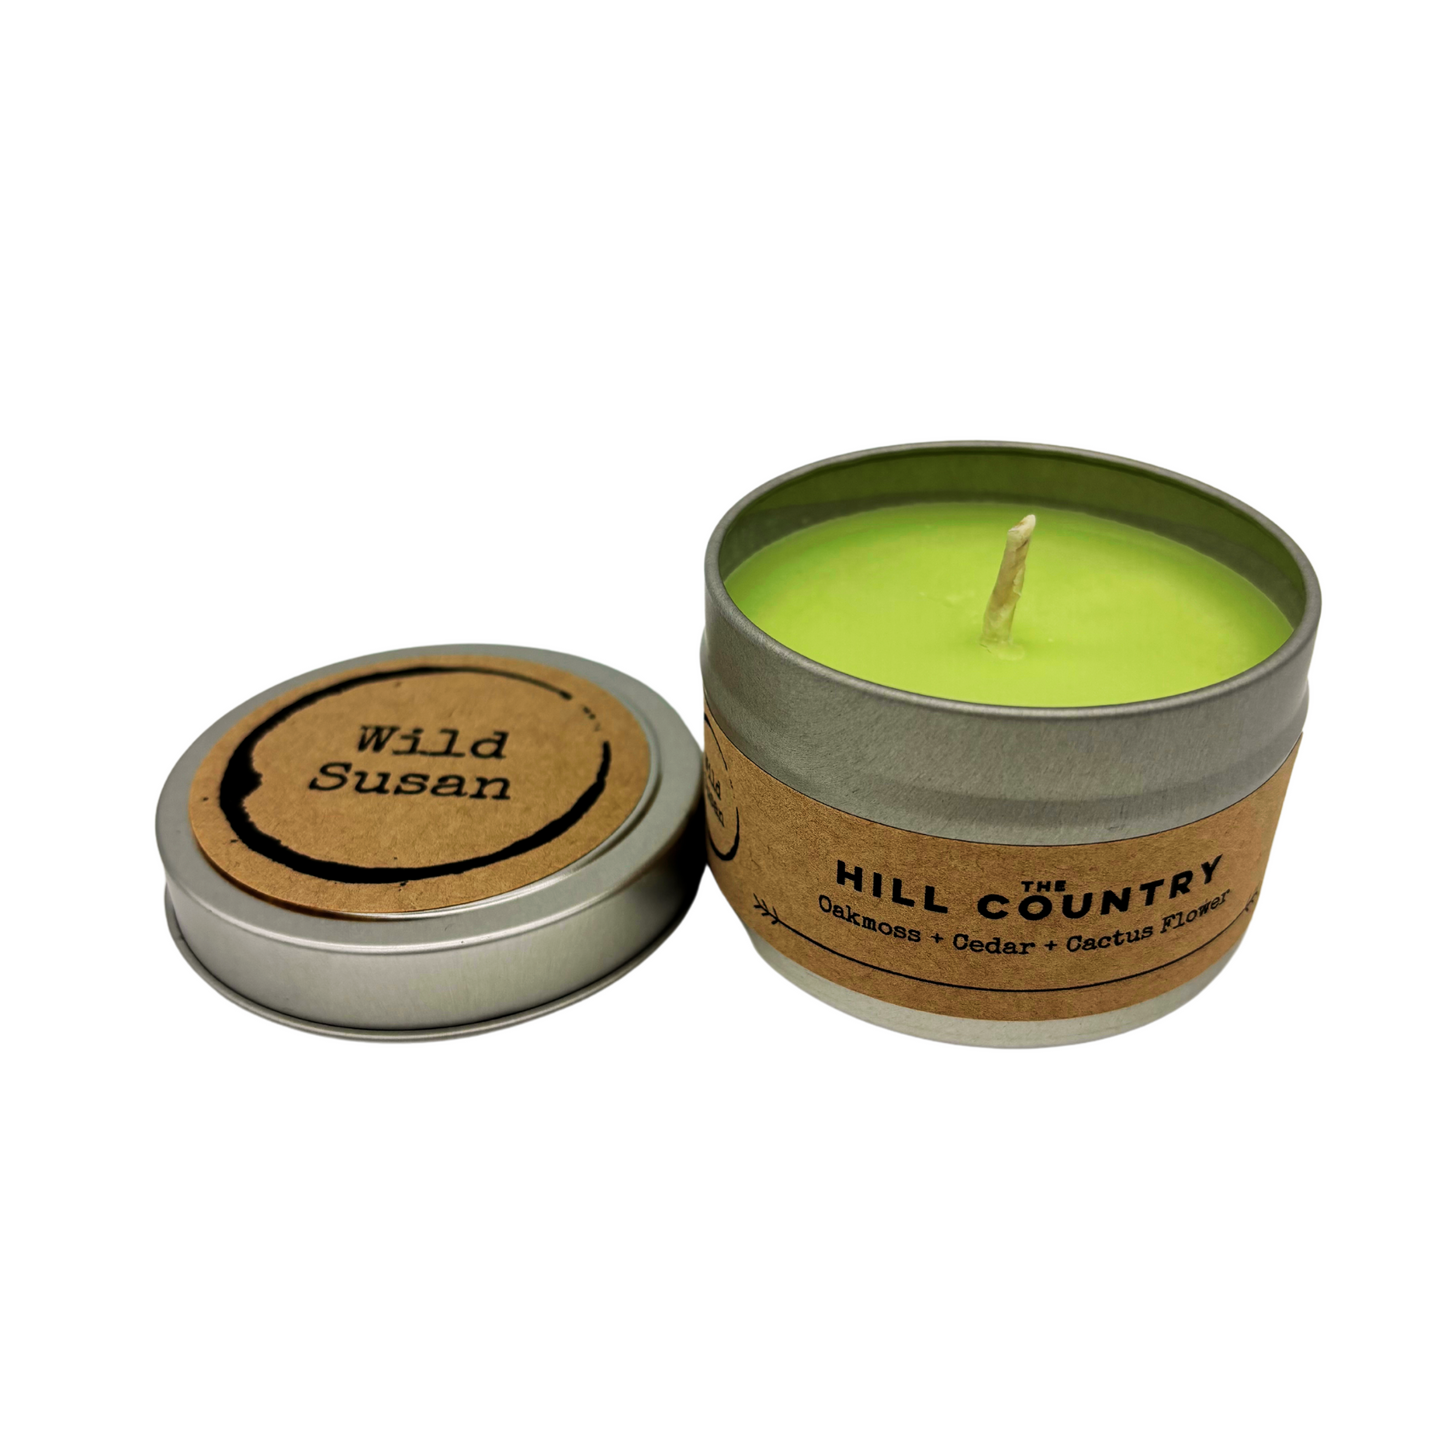 Hill Country [Oakmoss + Cedar + Cactus Flower] Soy Candle/Wax Melt